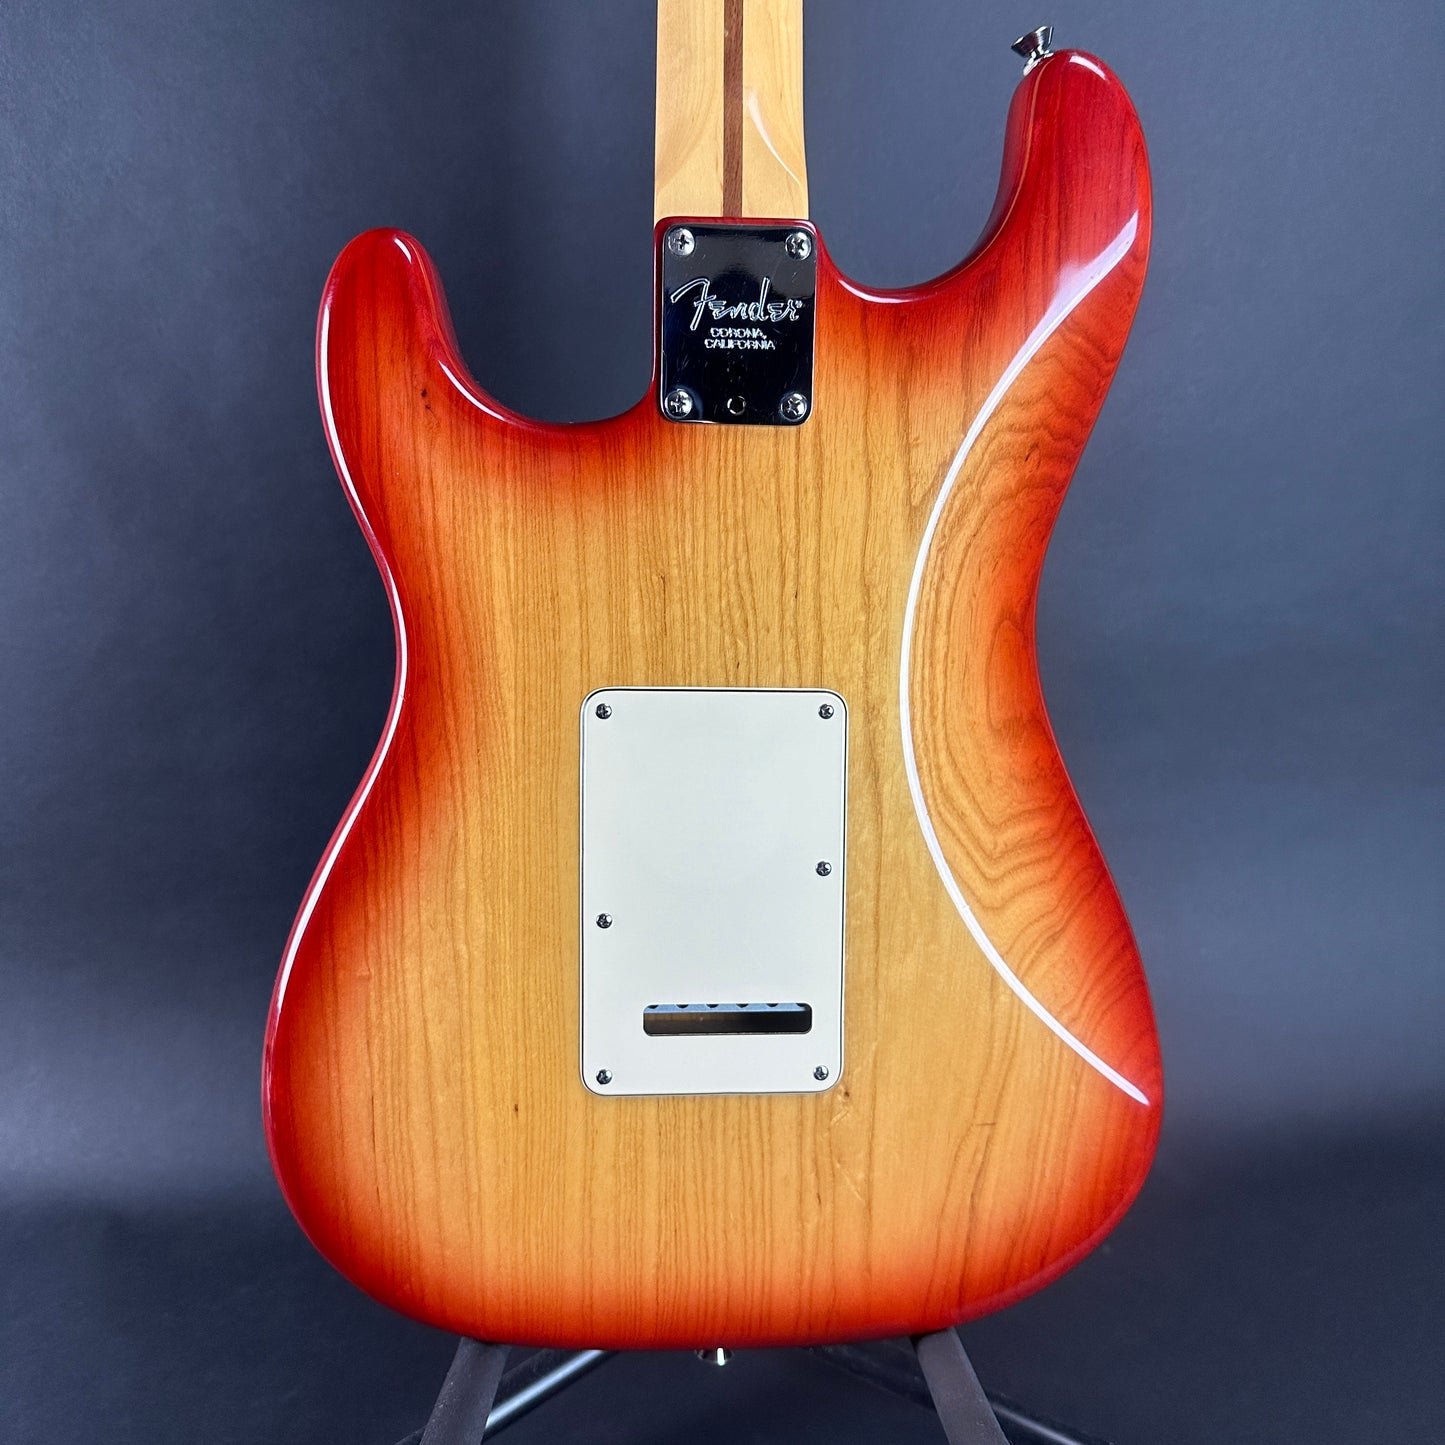 Back of body of Used Fender American Standard Strat Sienna MP.